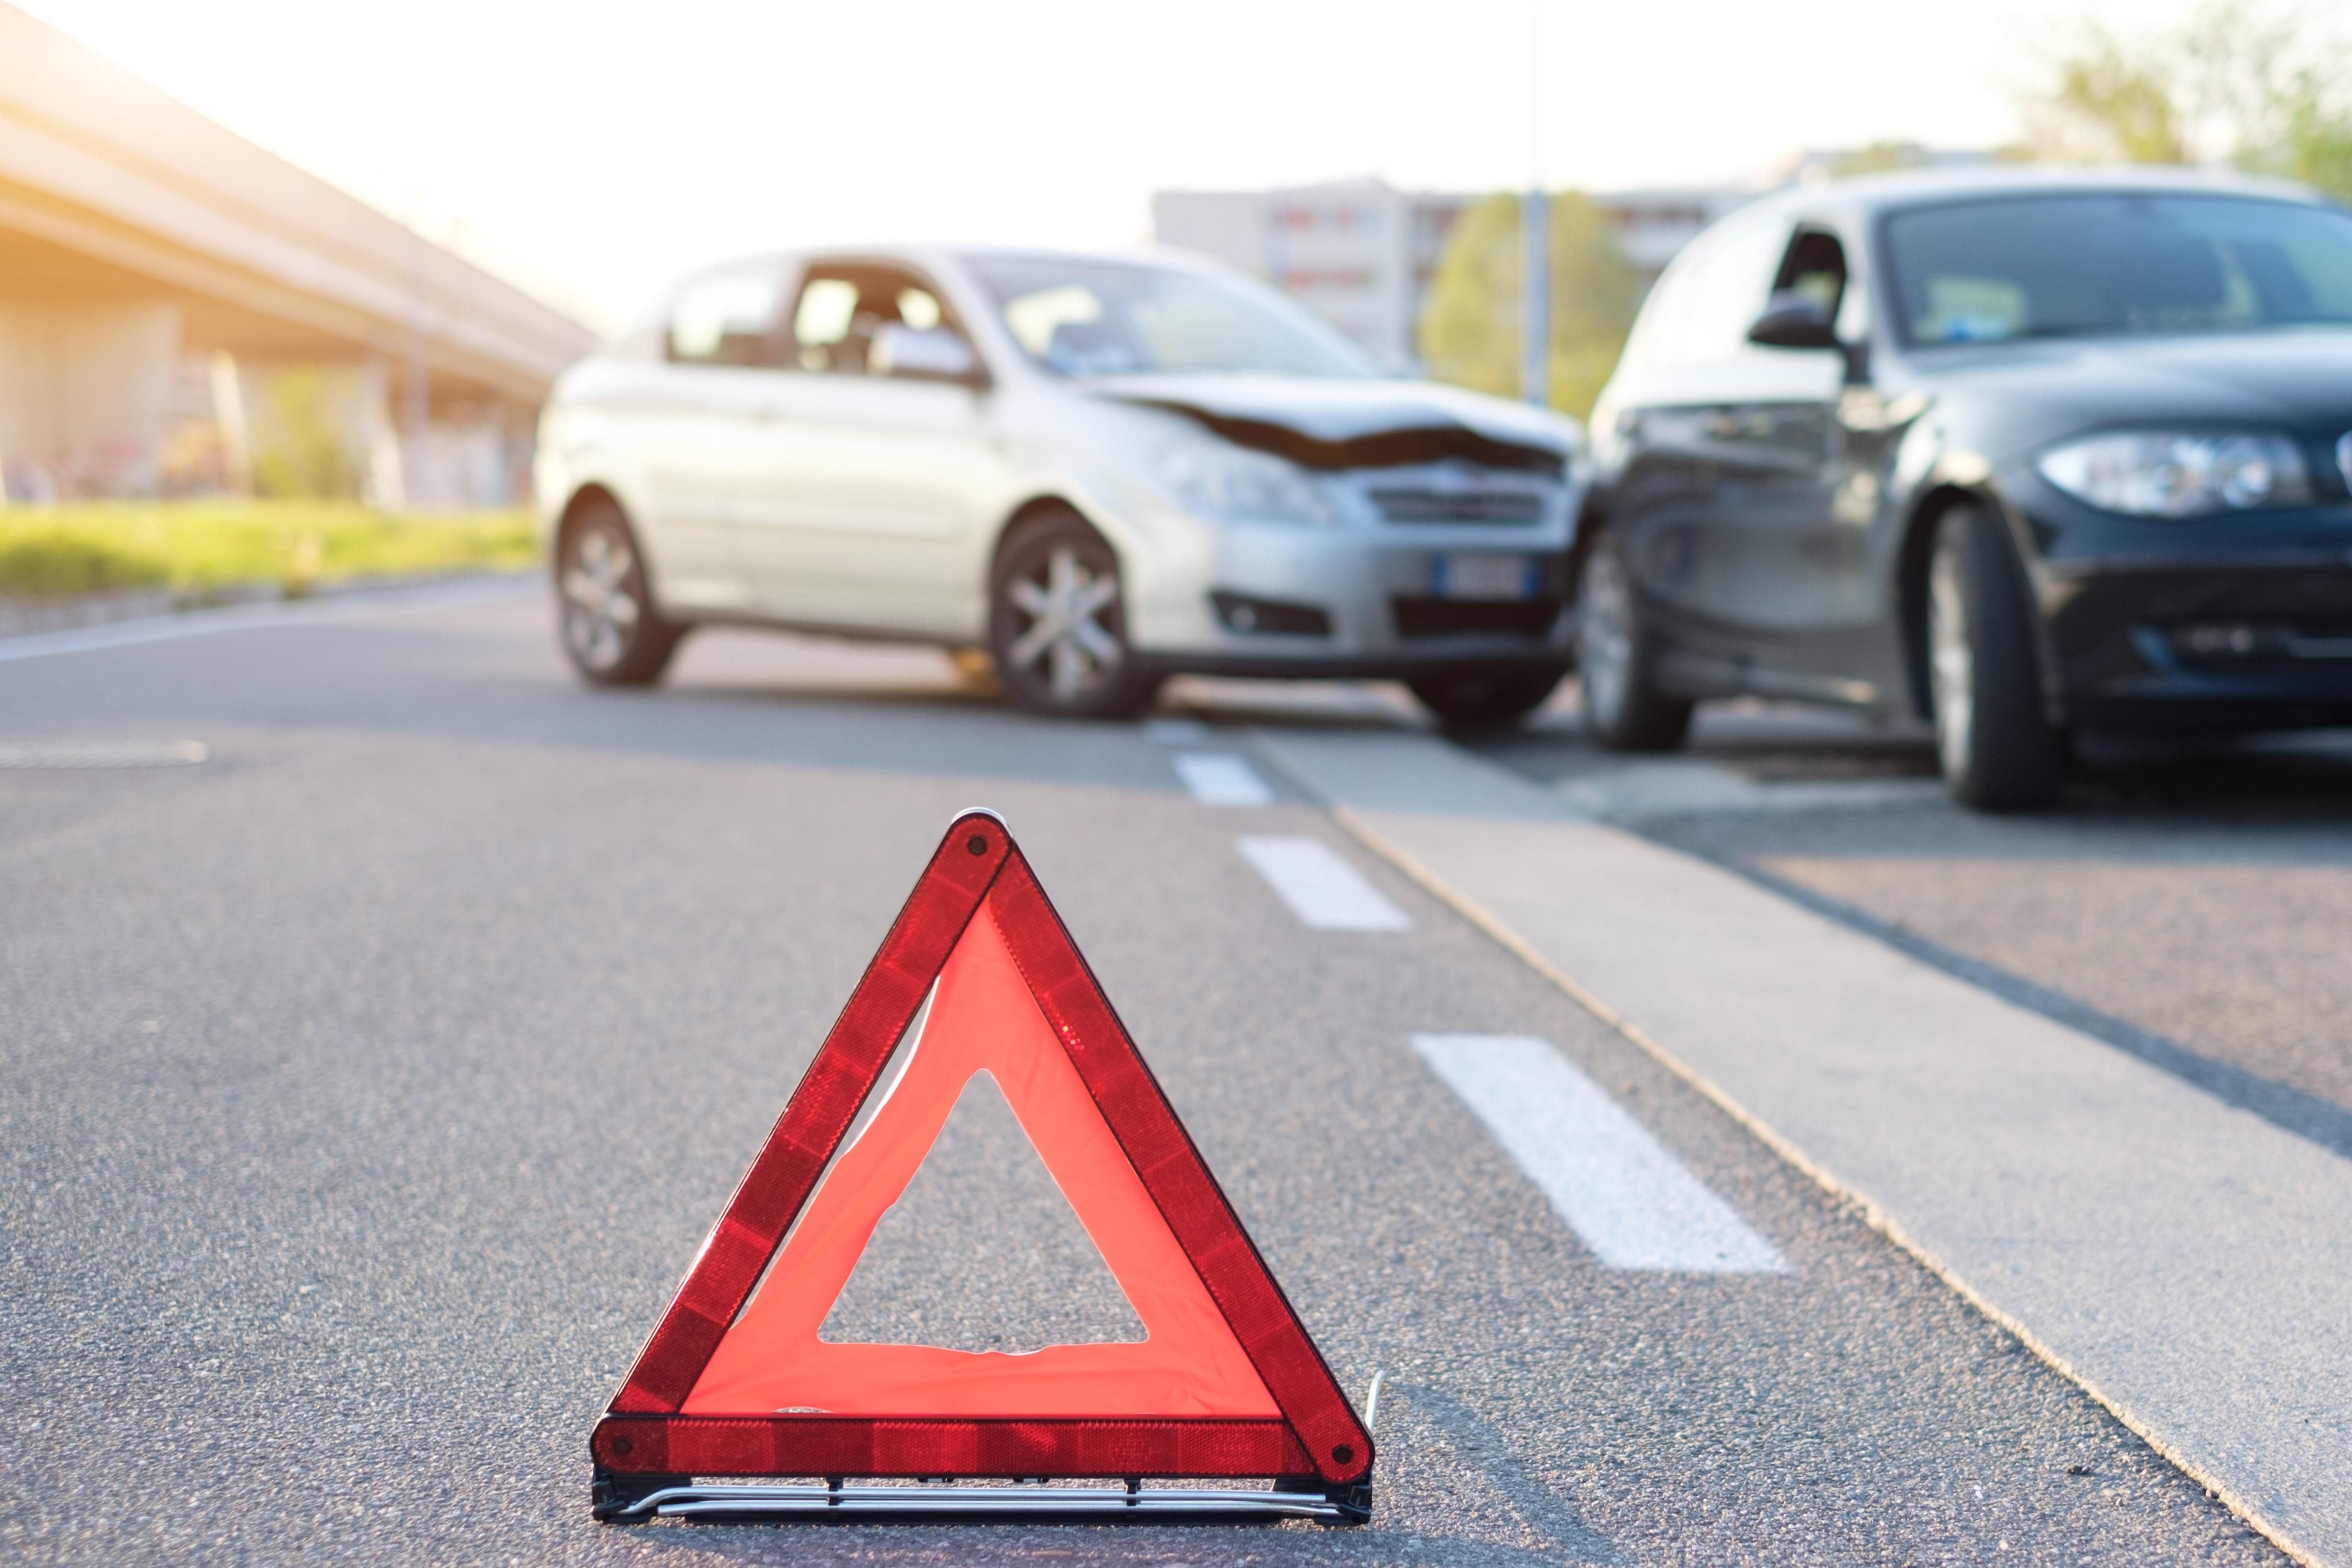 Caution triangle blocking vehicle accident